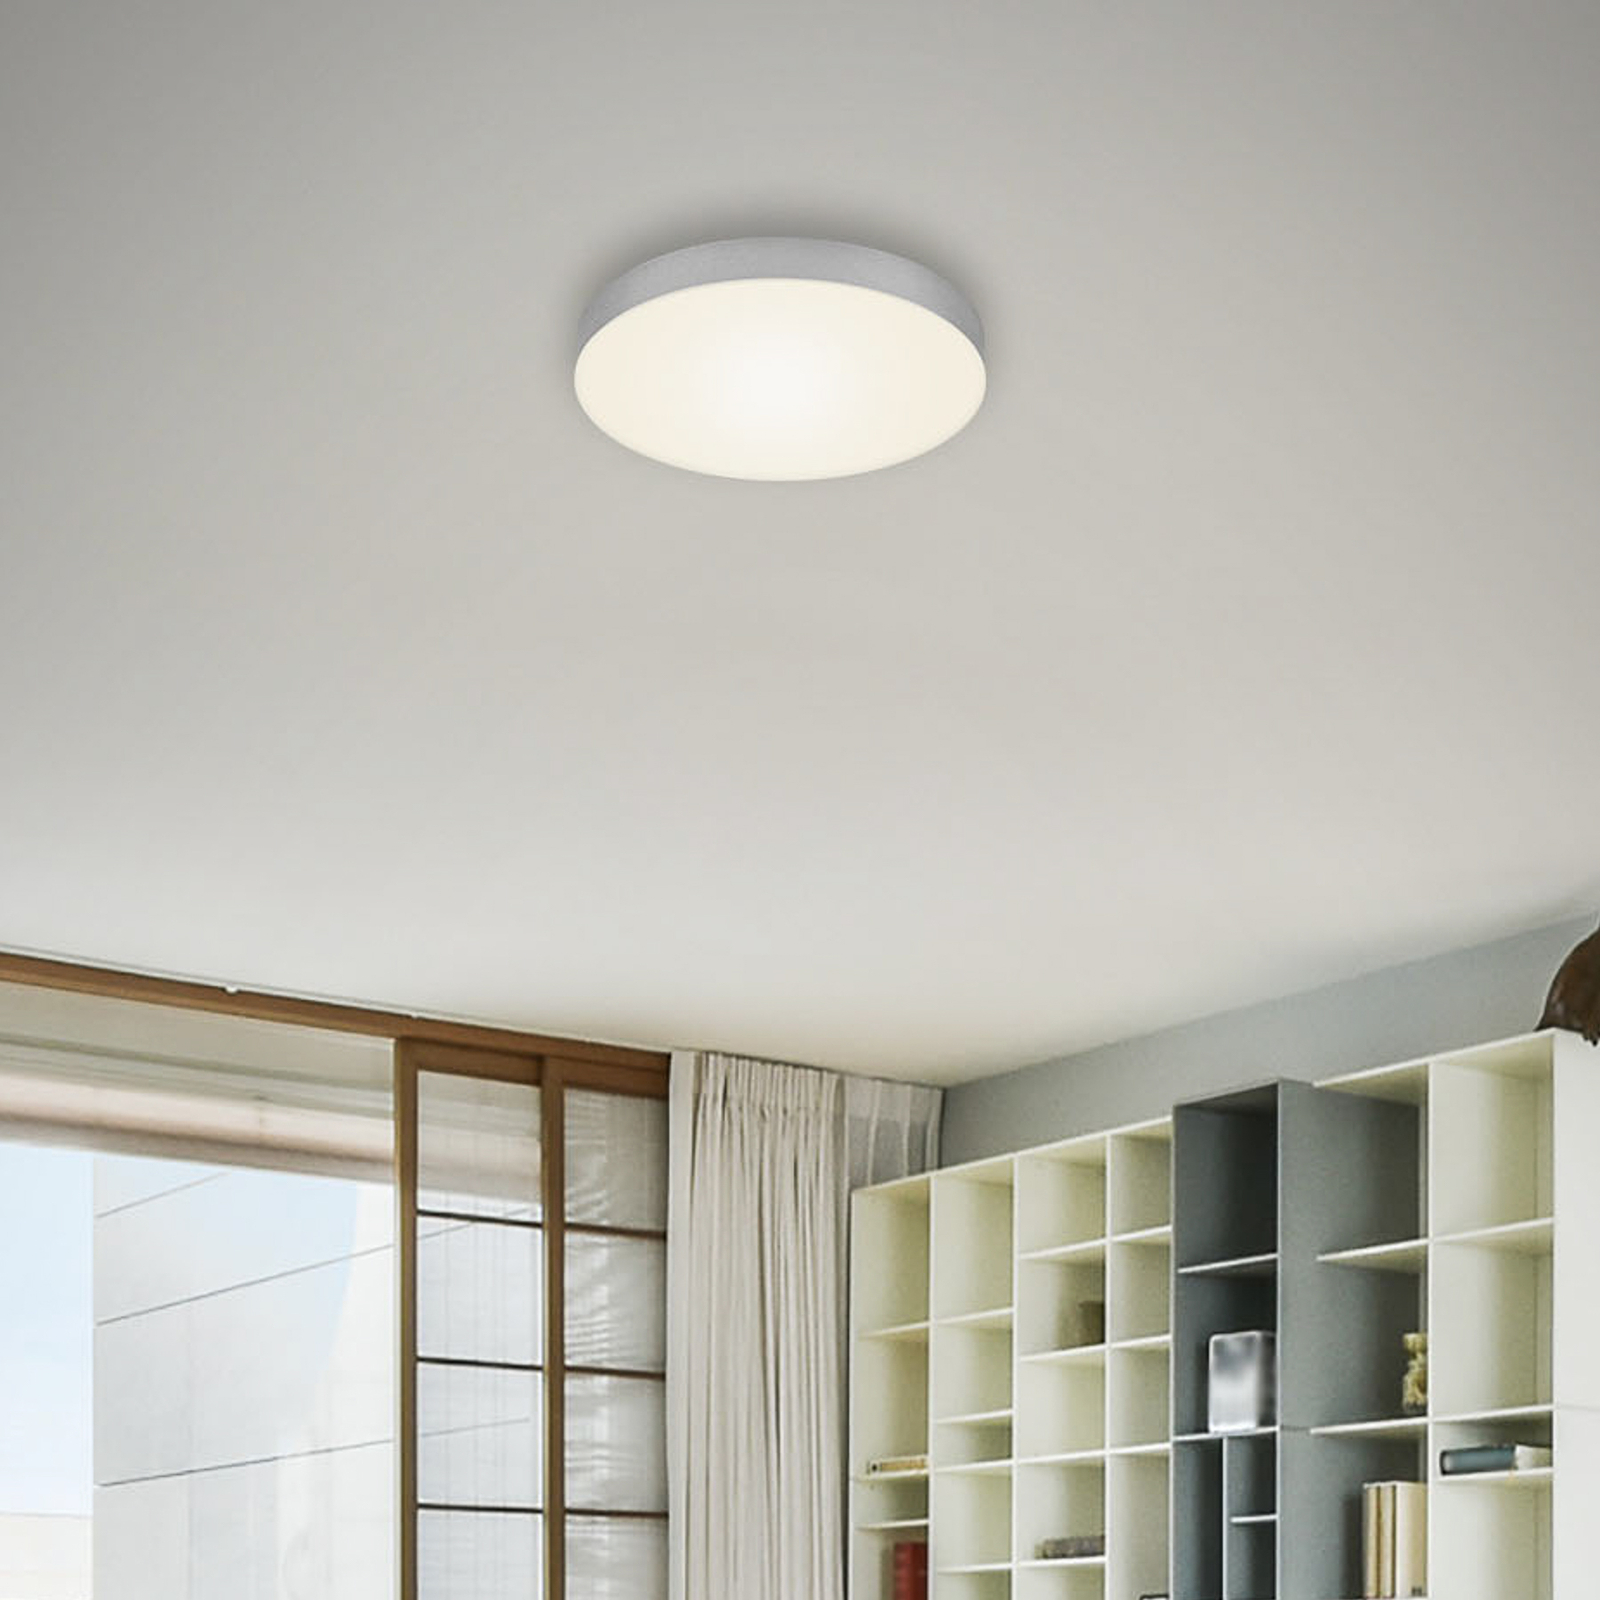 Flame LED ceiling light, Ø 21.2 cm, silver